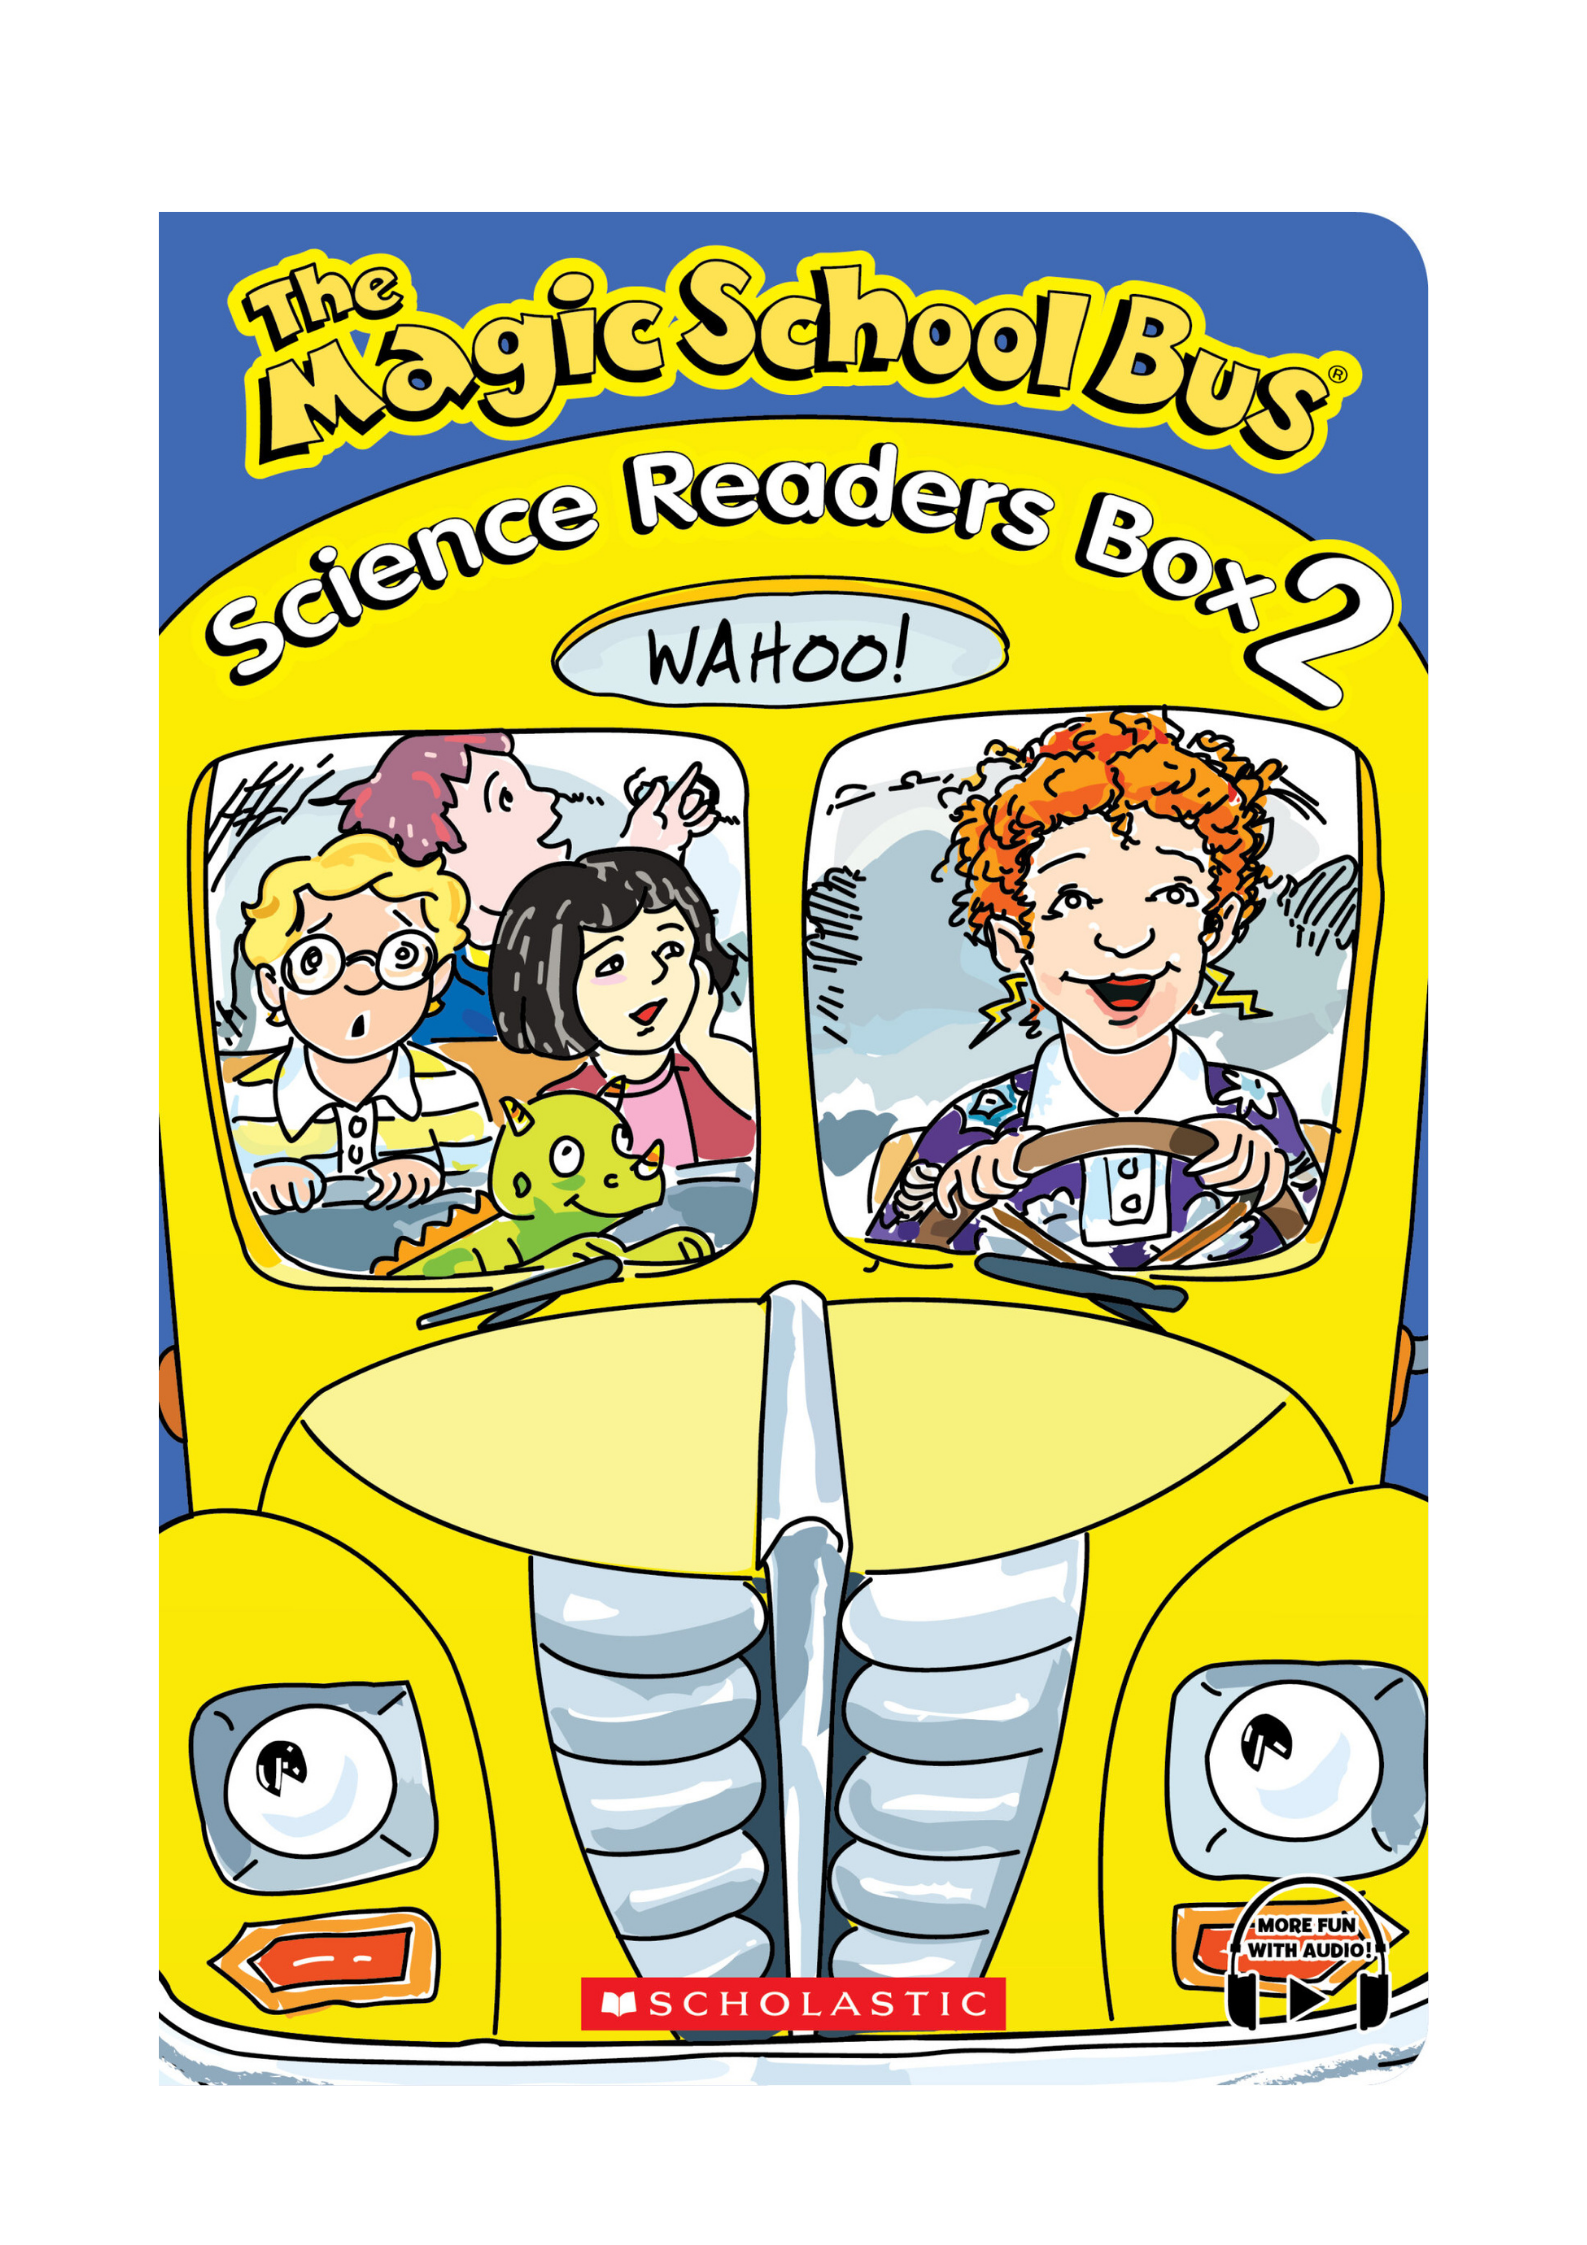 Magic School Bus Science Readers Box #2